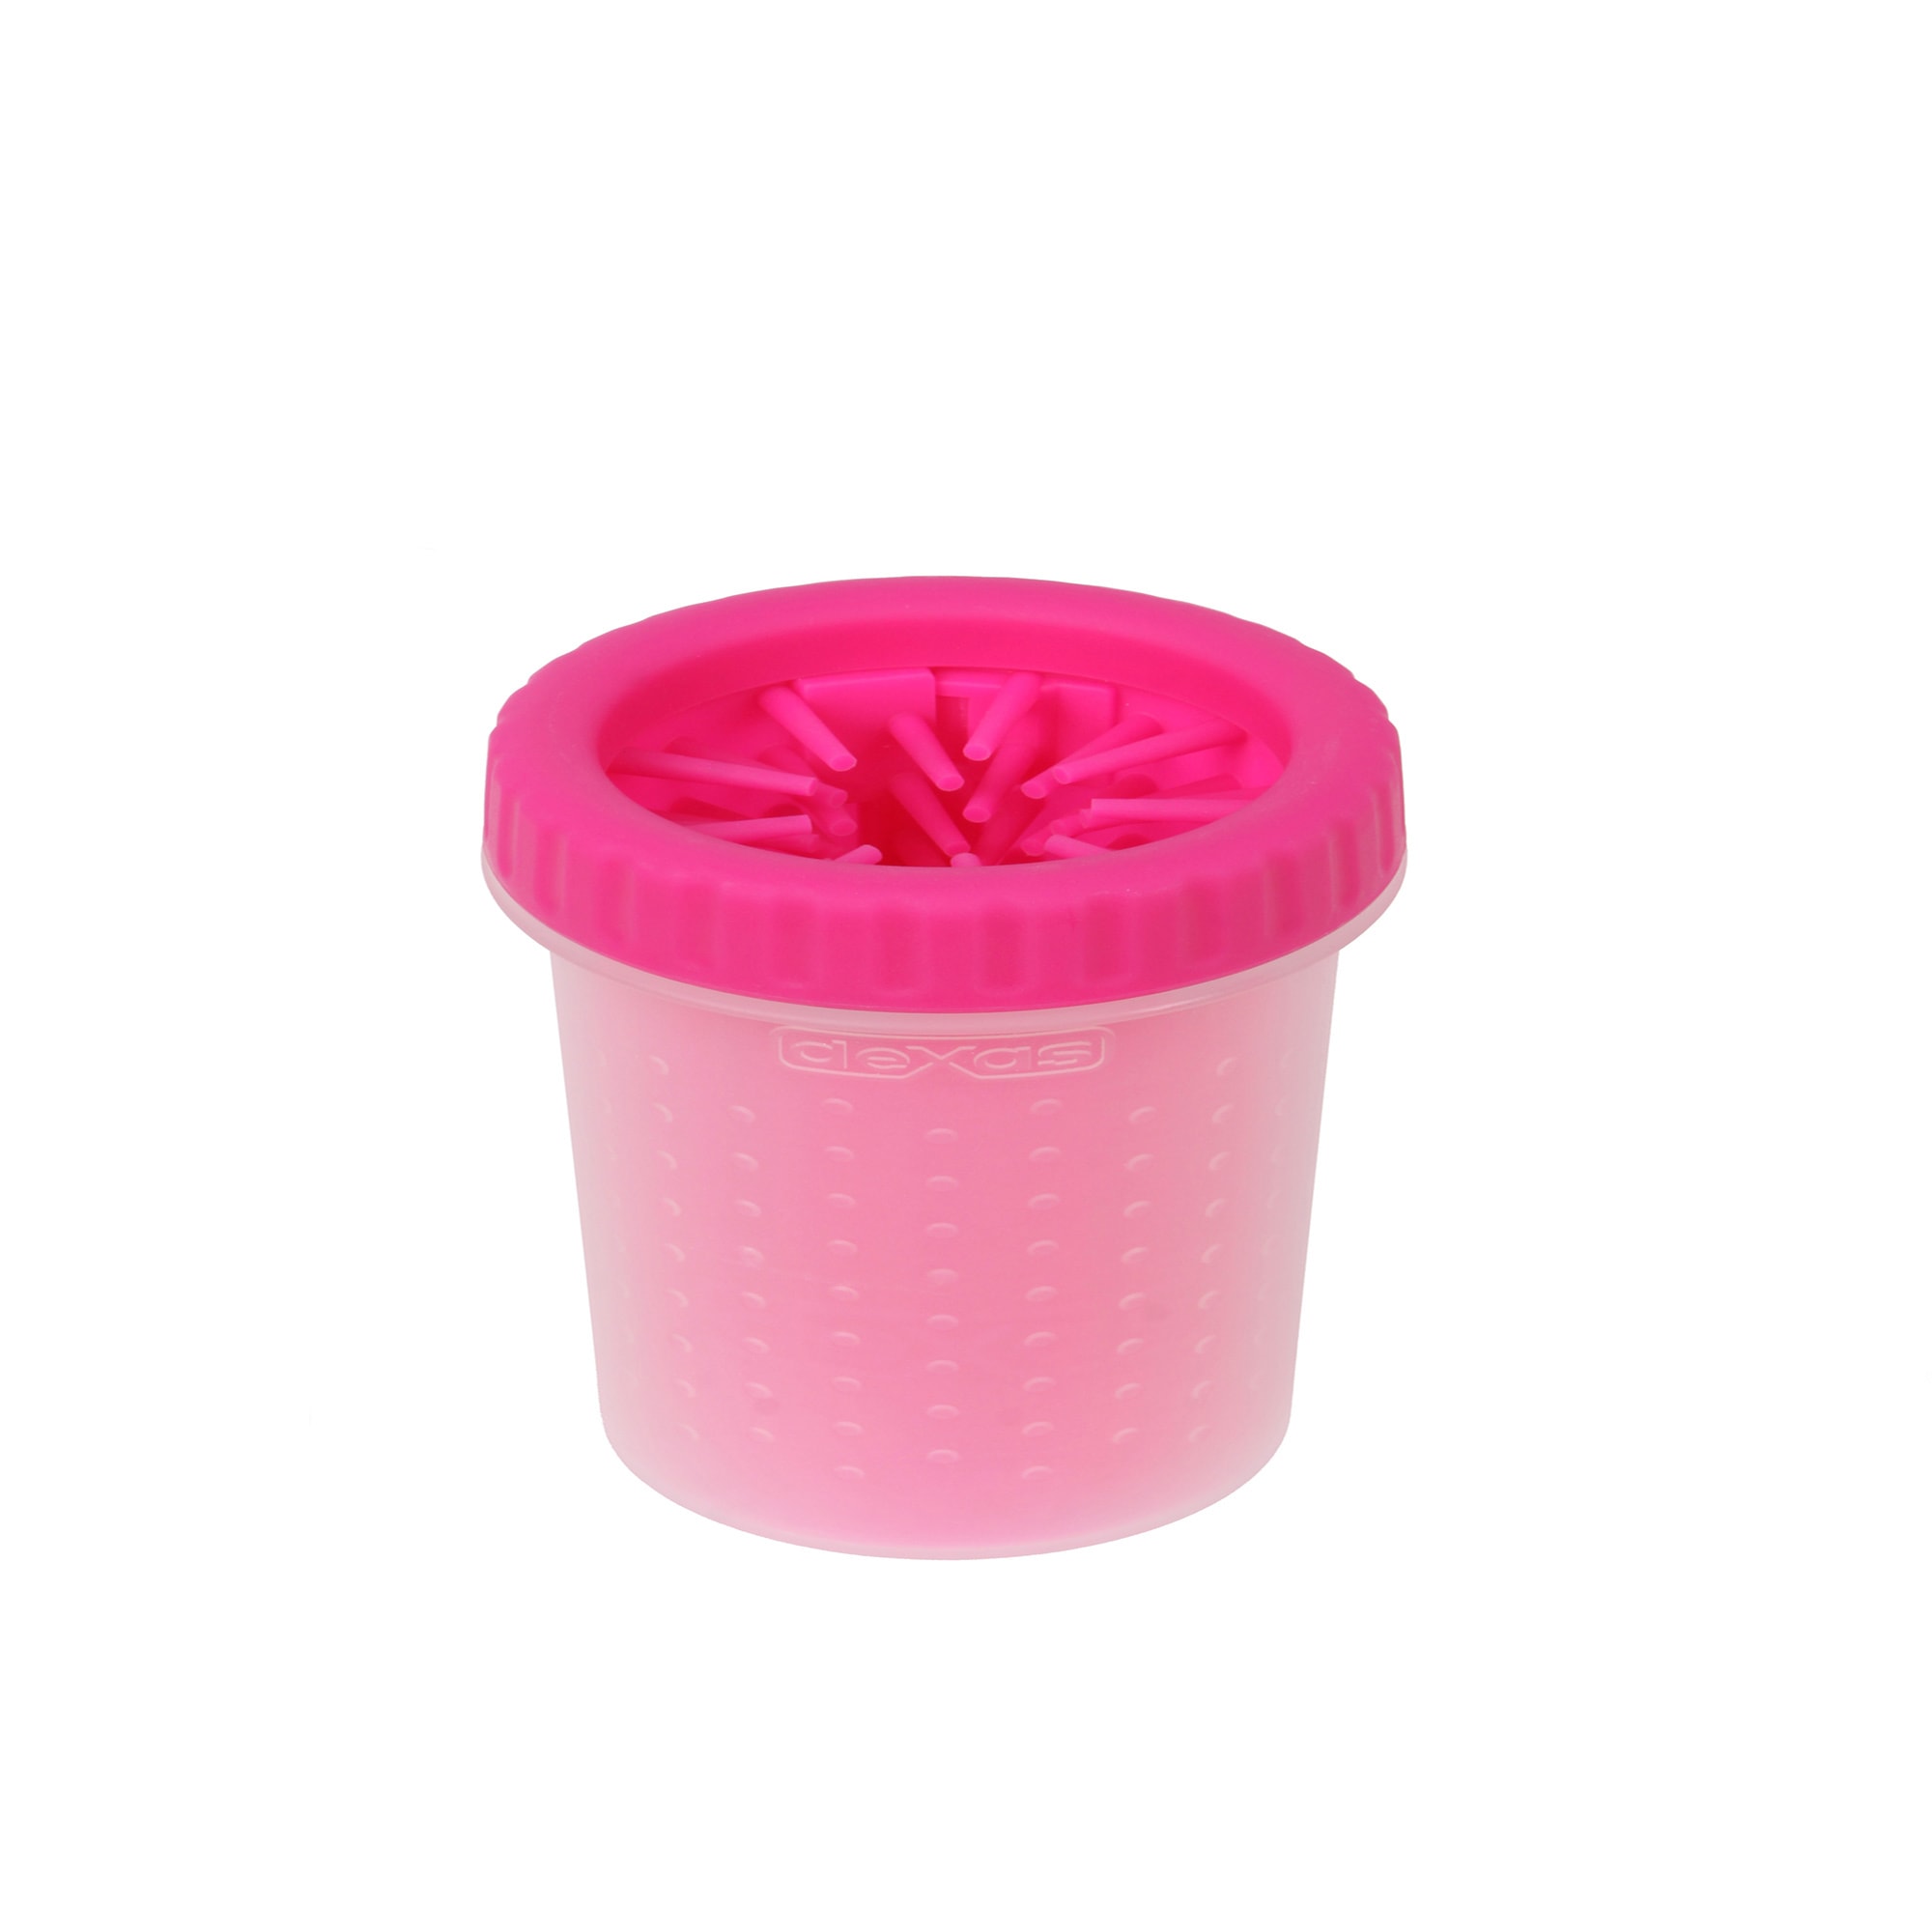 Dexas MudBuster Portable Pink Dog Paw Cleaner, Medium | Petco